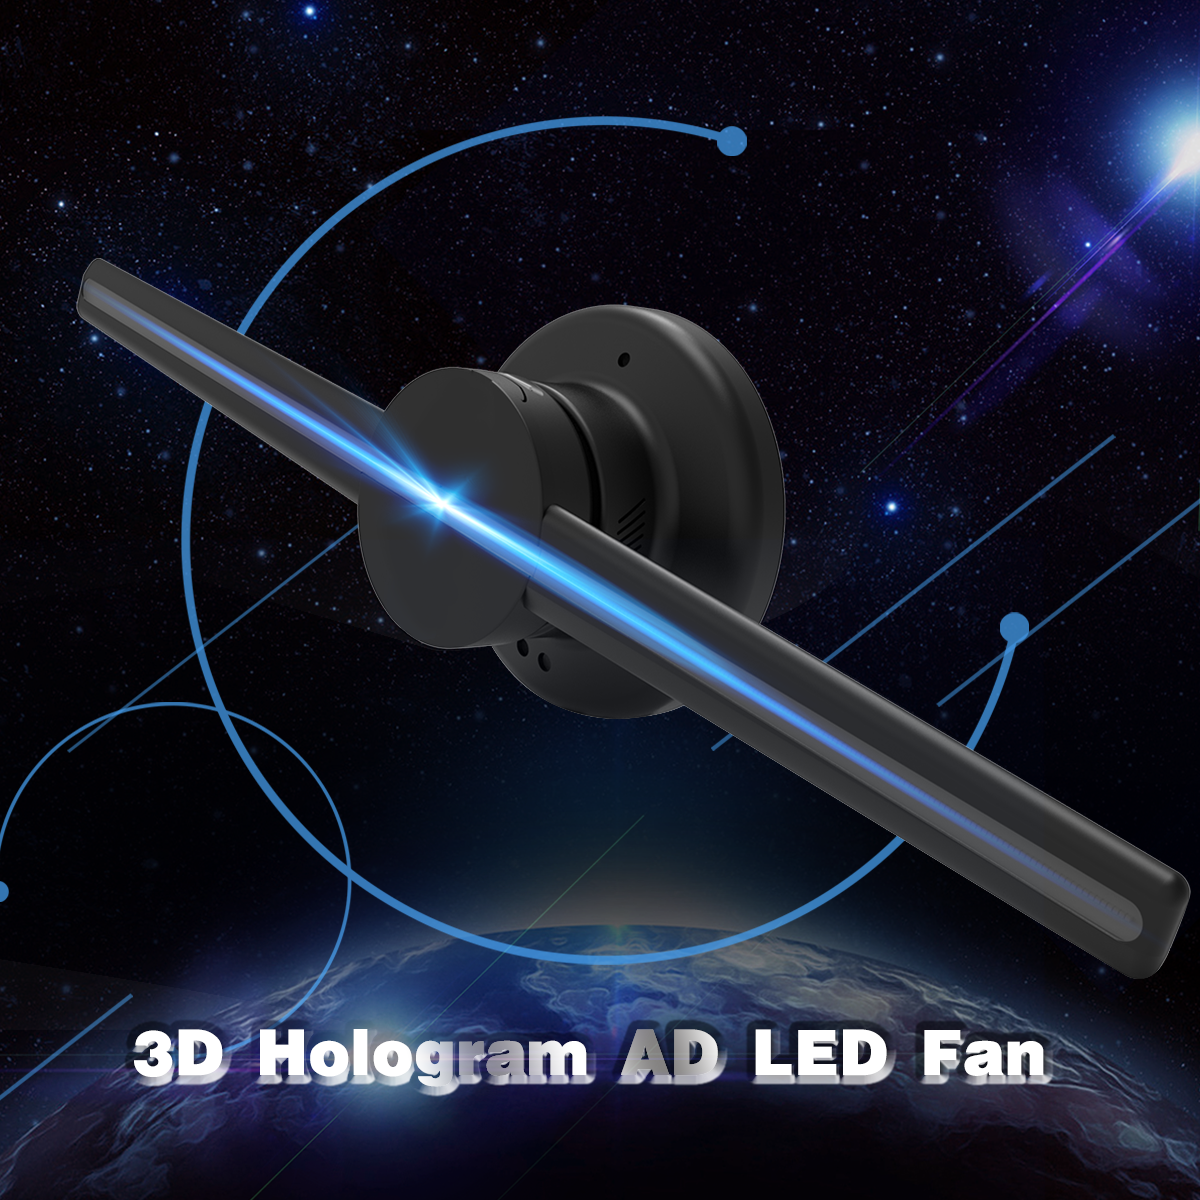 3D Hologram Advertising Display LED Fan, 42cm Holographic 